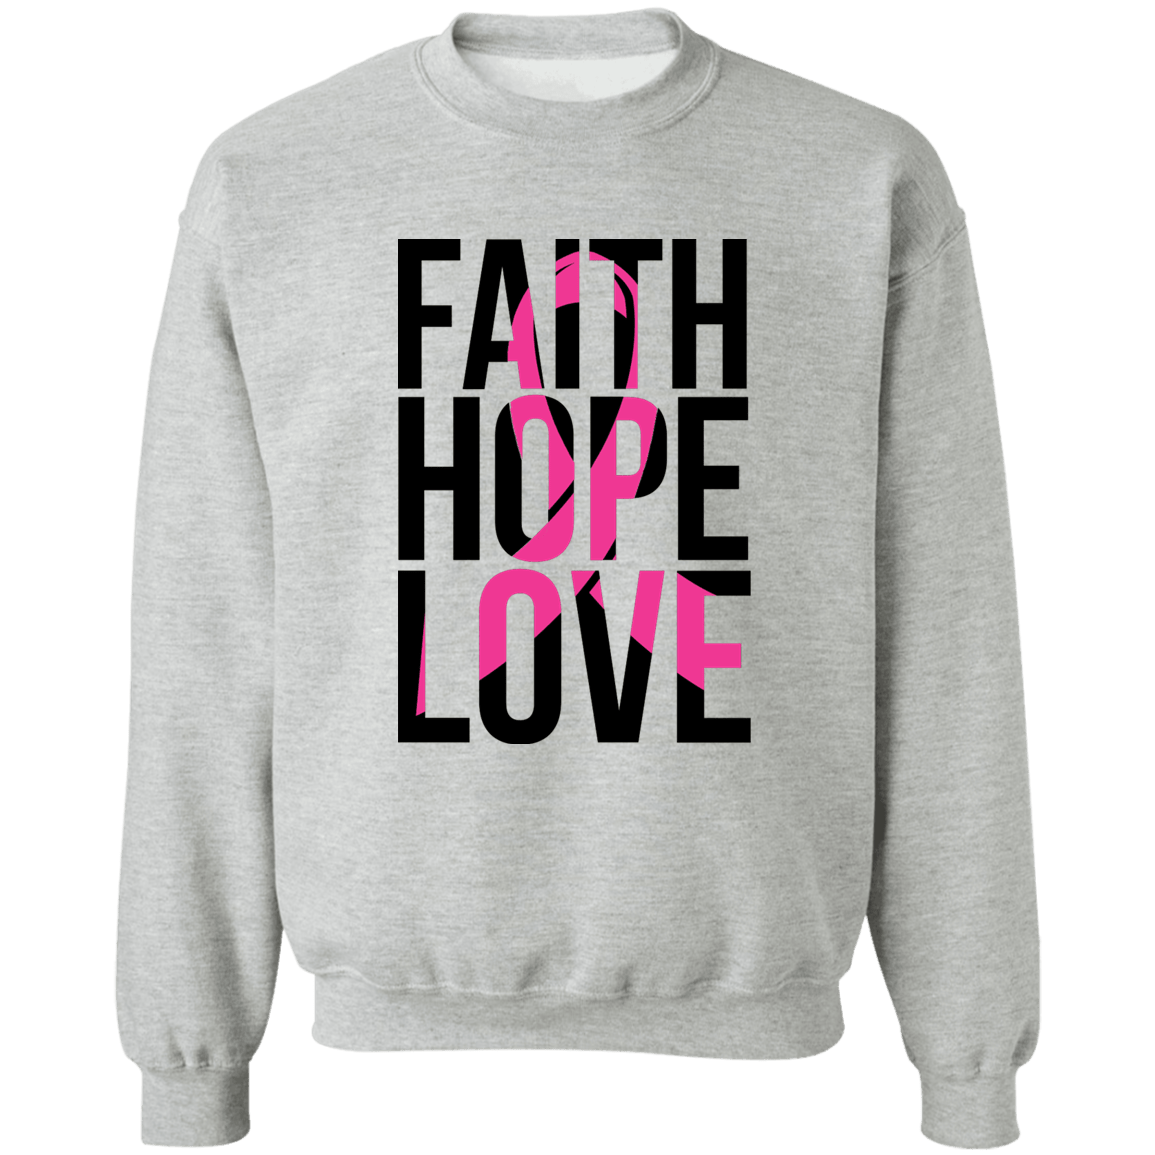 Hope, Faith & Love Unisex Crewneck Pullover Sweatshirt